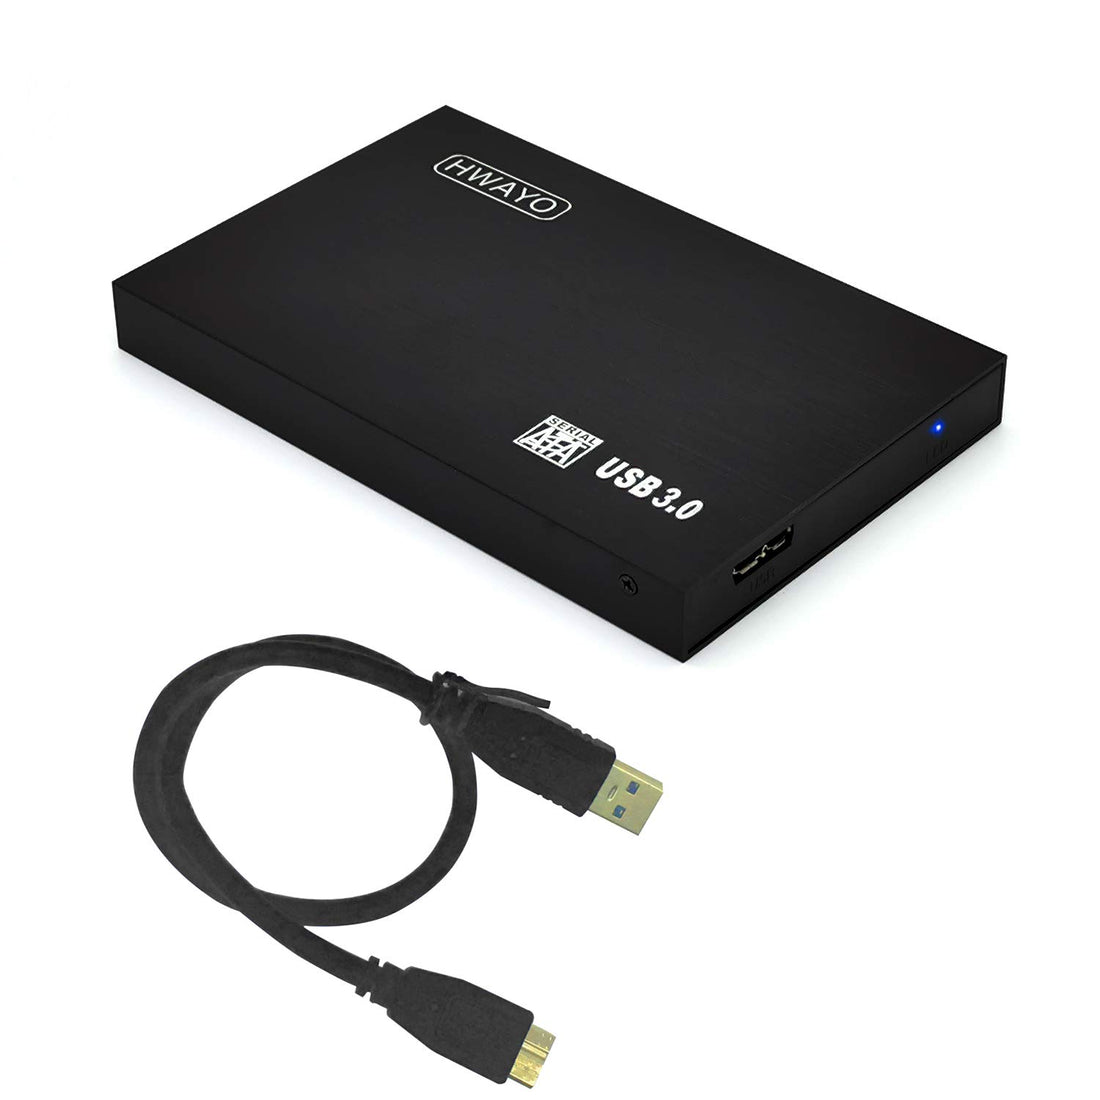 HWAYO 2.5'' 120GB Ultra Slim Portable External Hard Drive USB3.0 HDD Storage for PC/Desktop/Laptop/MacBook/Chromebook (Black)